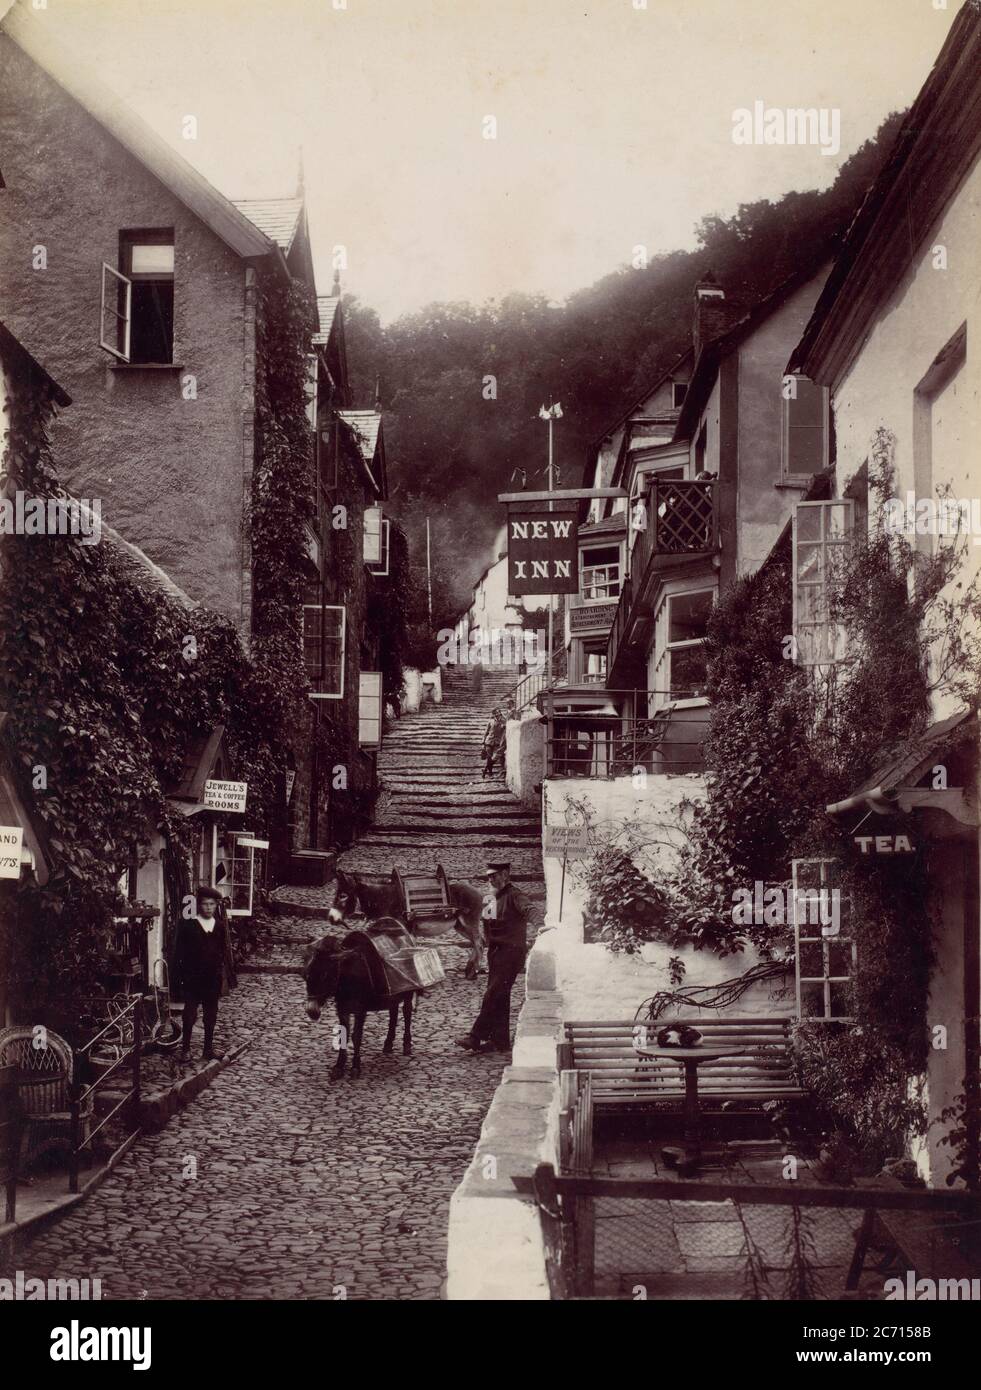 Clovelly, The New Inn and Street, 1870s. Stock Photo